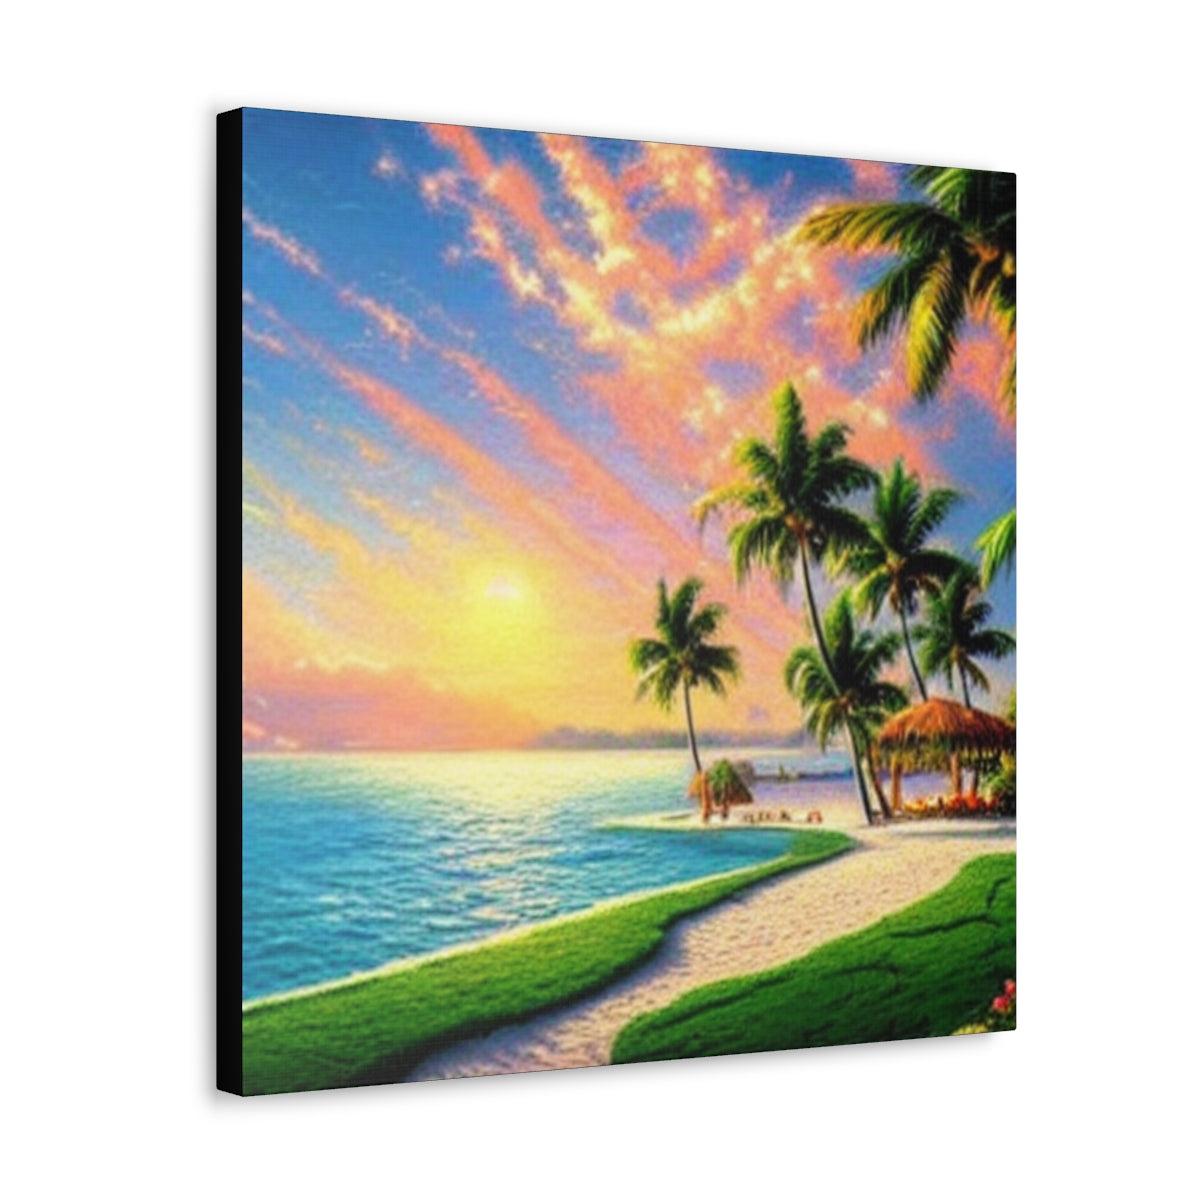 Sunset Beach Cabana Art Print